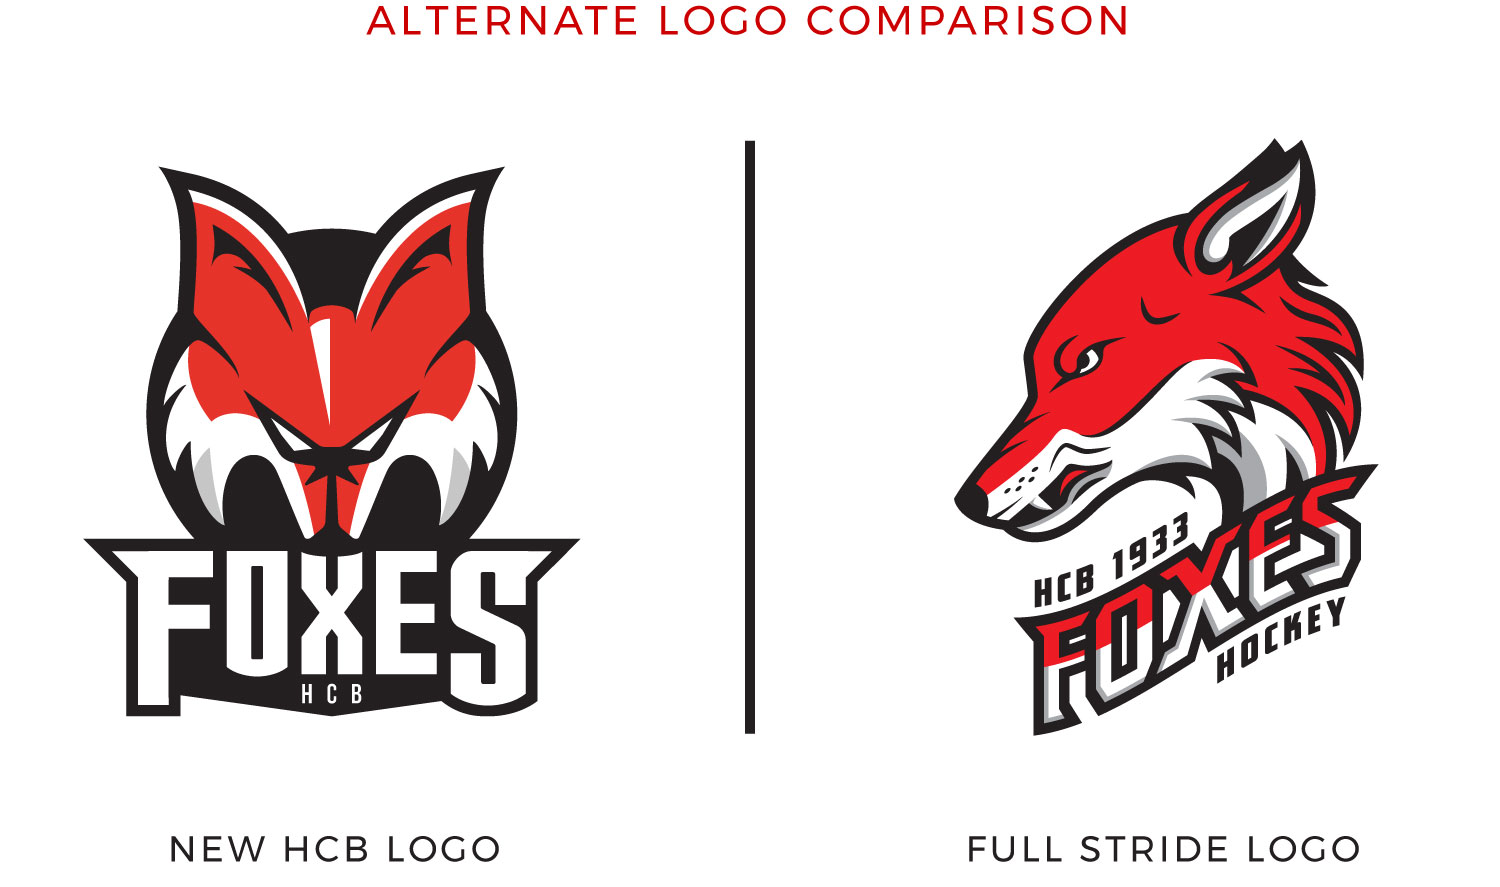 HCB_Foxes_Logo-Comparison-Alternate.jpg